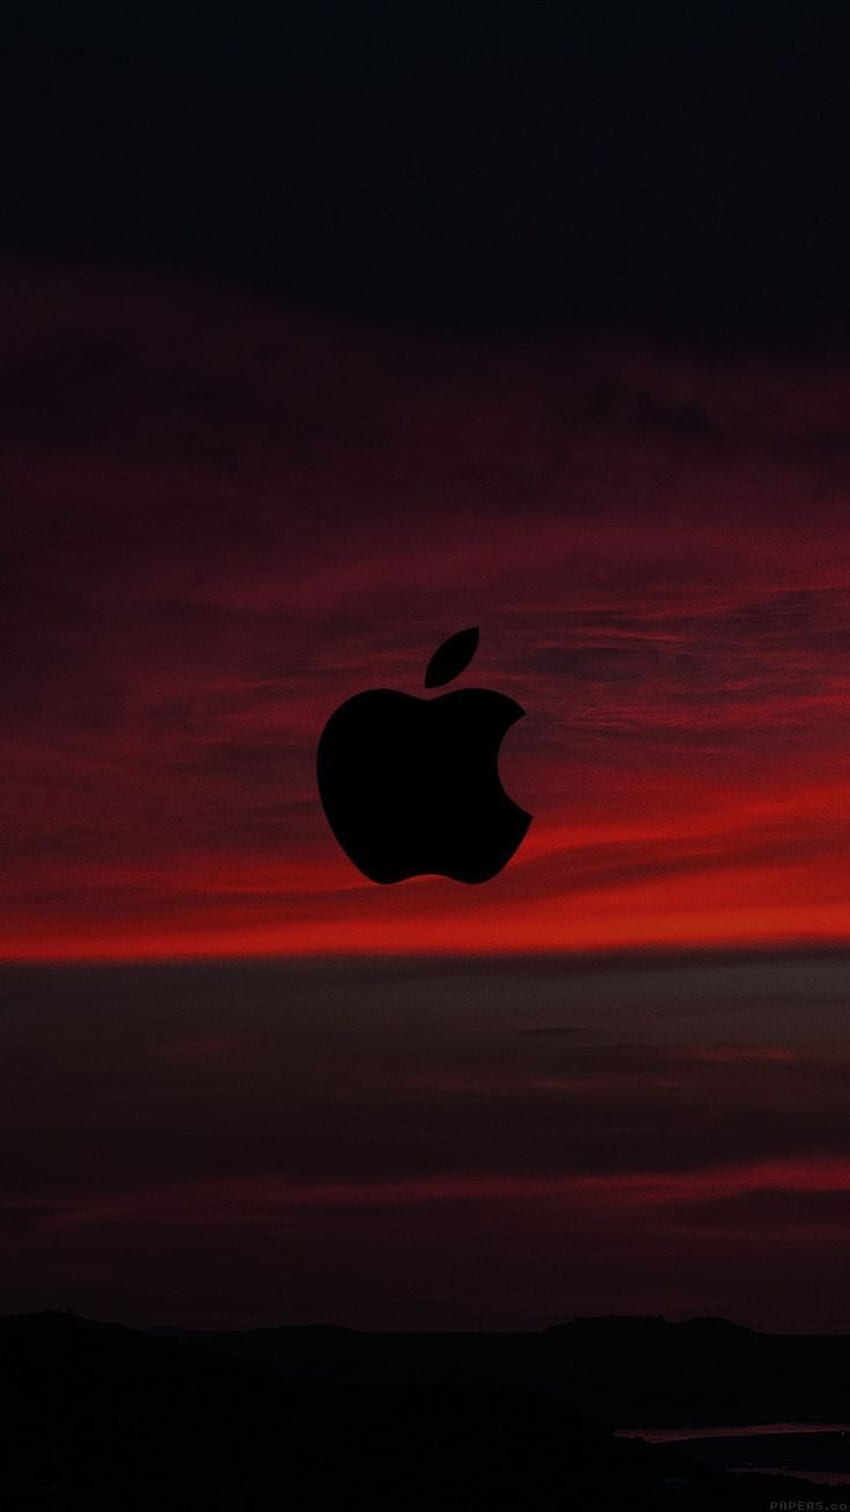 Red and Black iPhone - Top Red and Black iPhone Background - Wallpap nel 2021. iPhone nero, Apple iphone, Apple logo iphone Sfondo del telefono HD